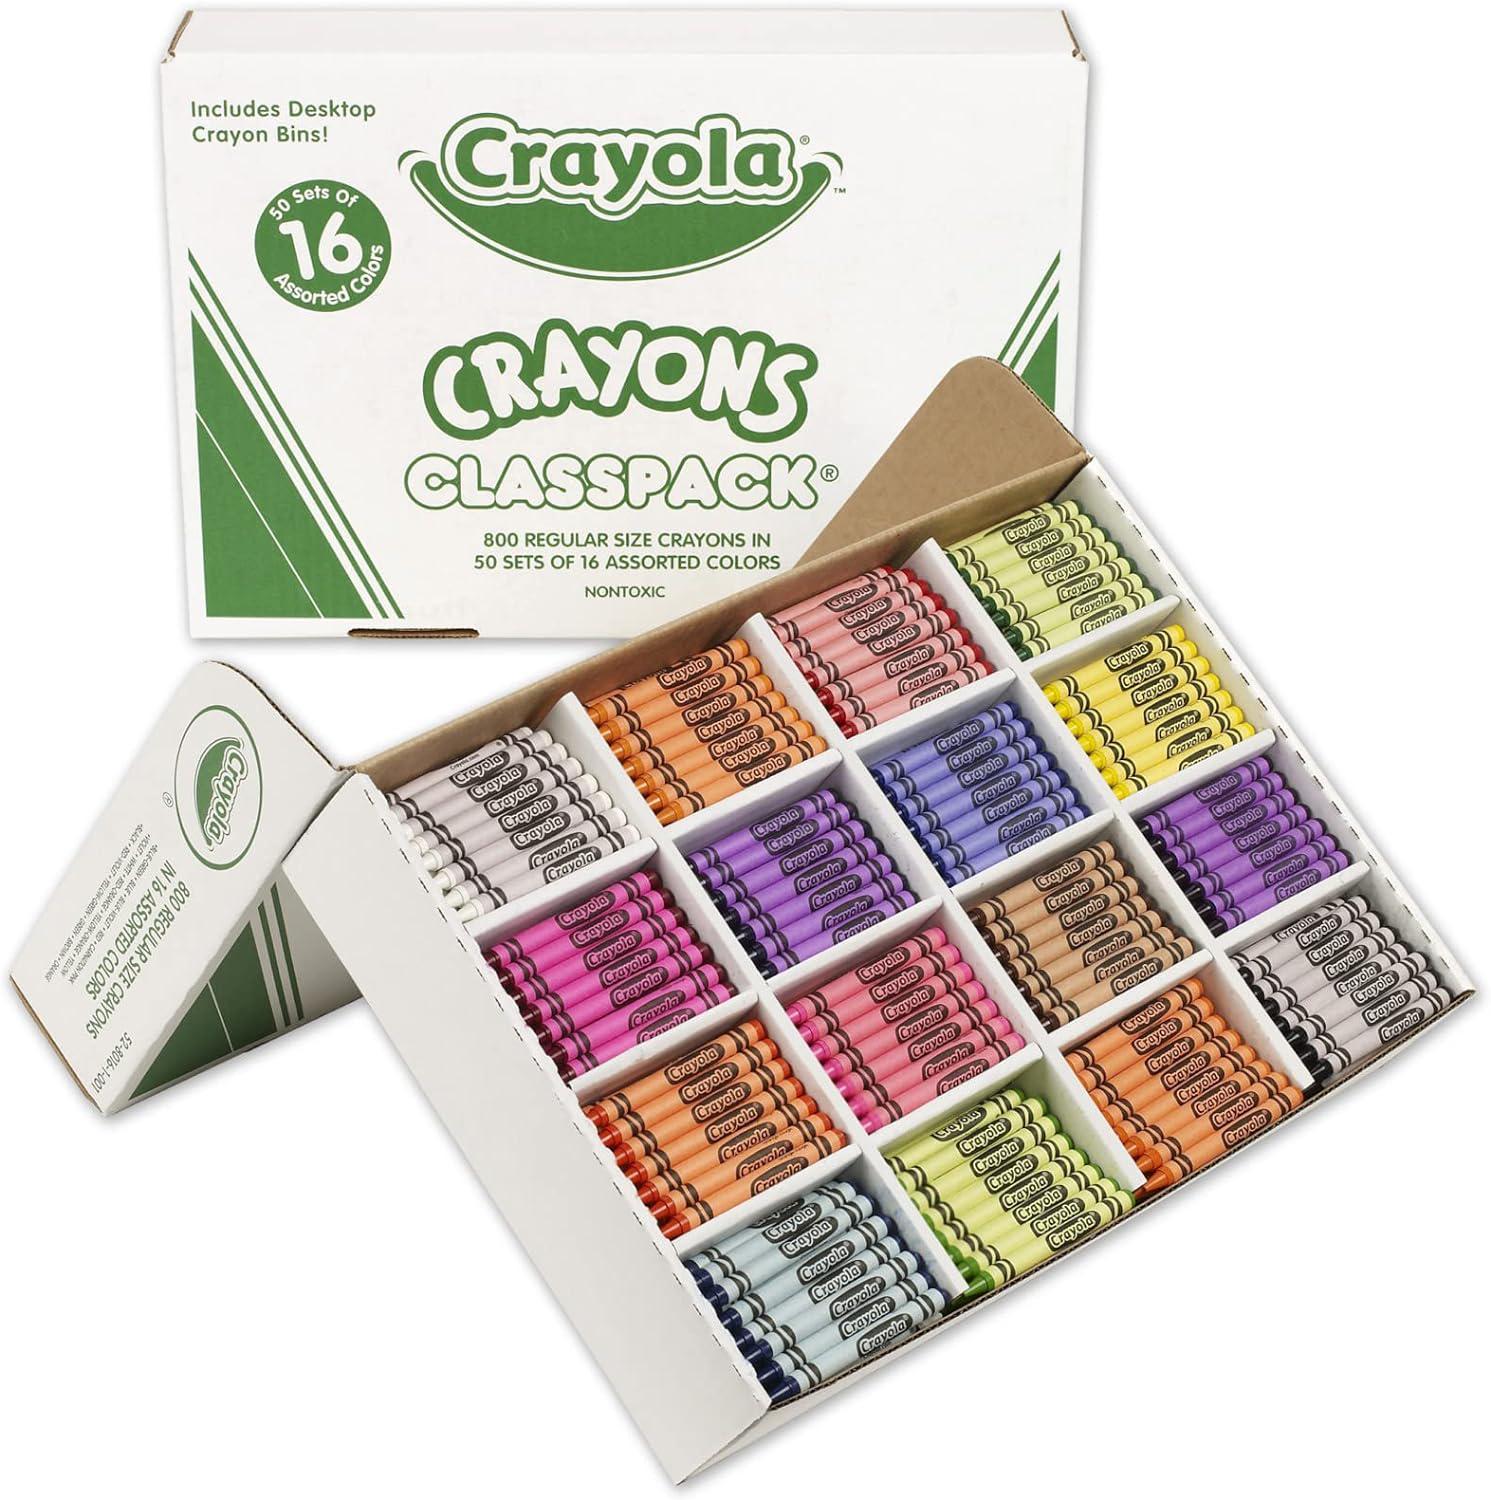  CRAYTASTIC! 100 Bulk Crayons (25 Sets of 4 Packs